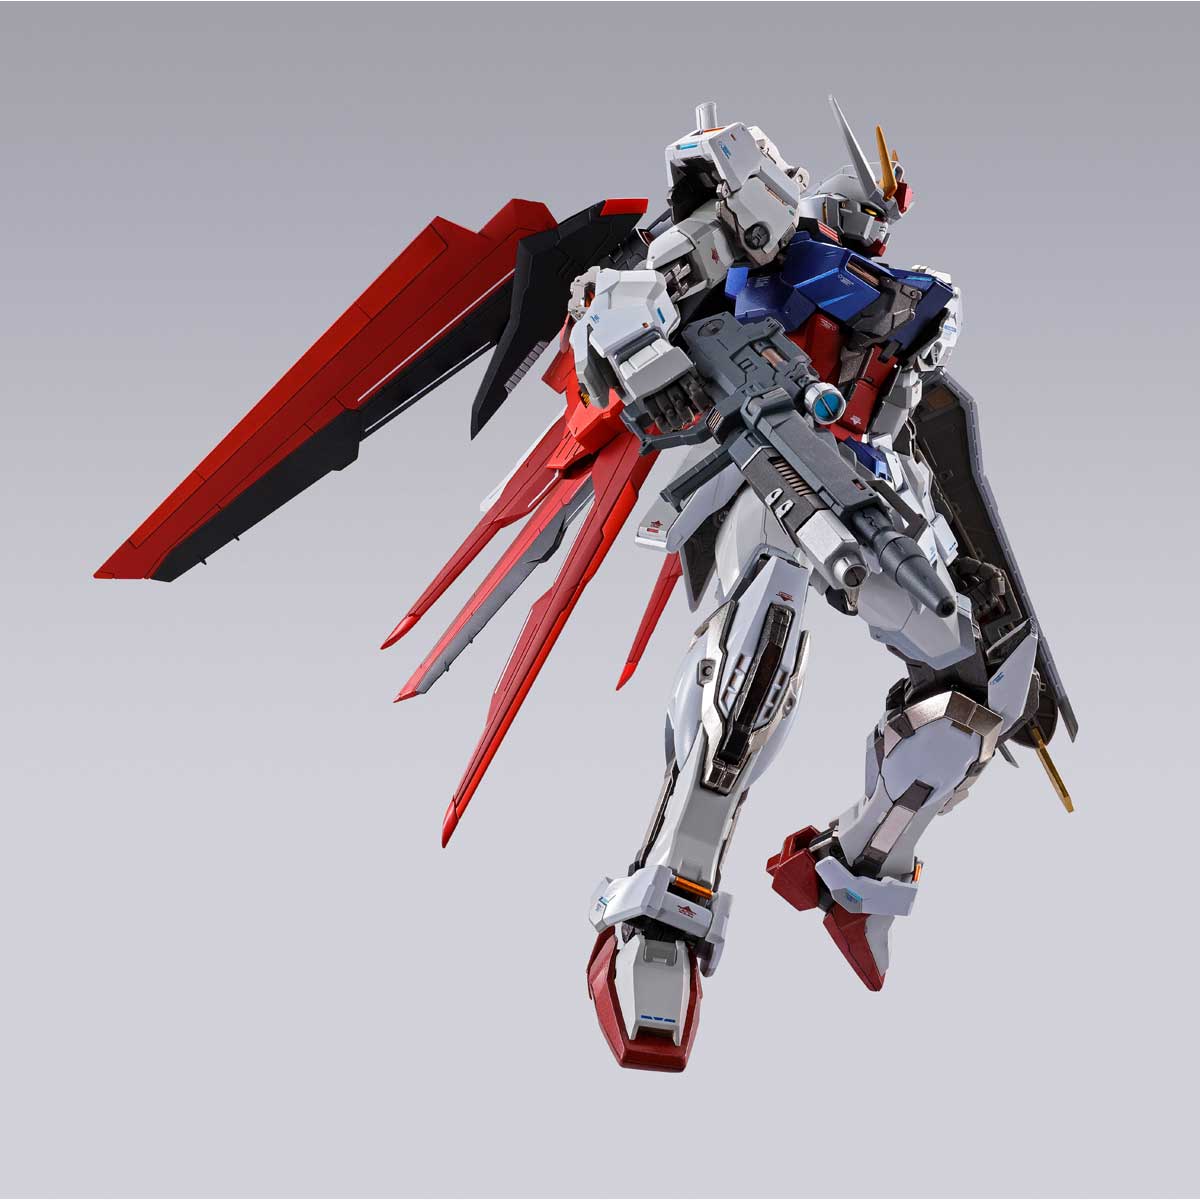 Metal Build Aile Striker Gundam Premium Bandai Singapore Online Store For Action Figures Model Kits Toys And More